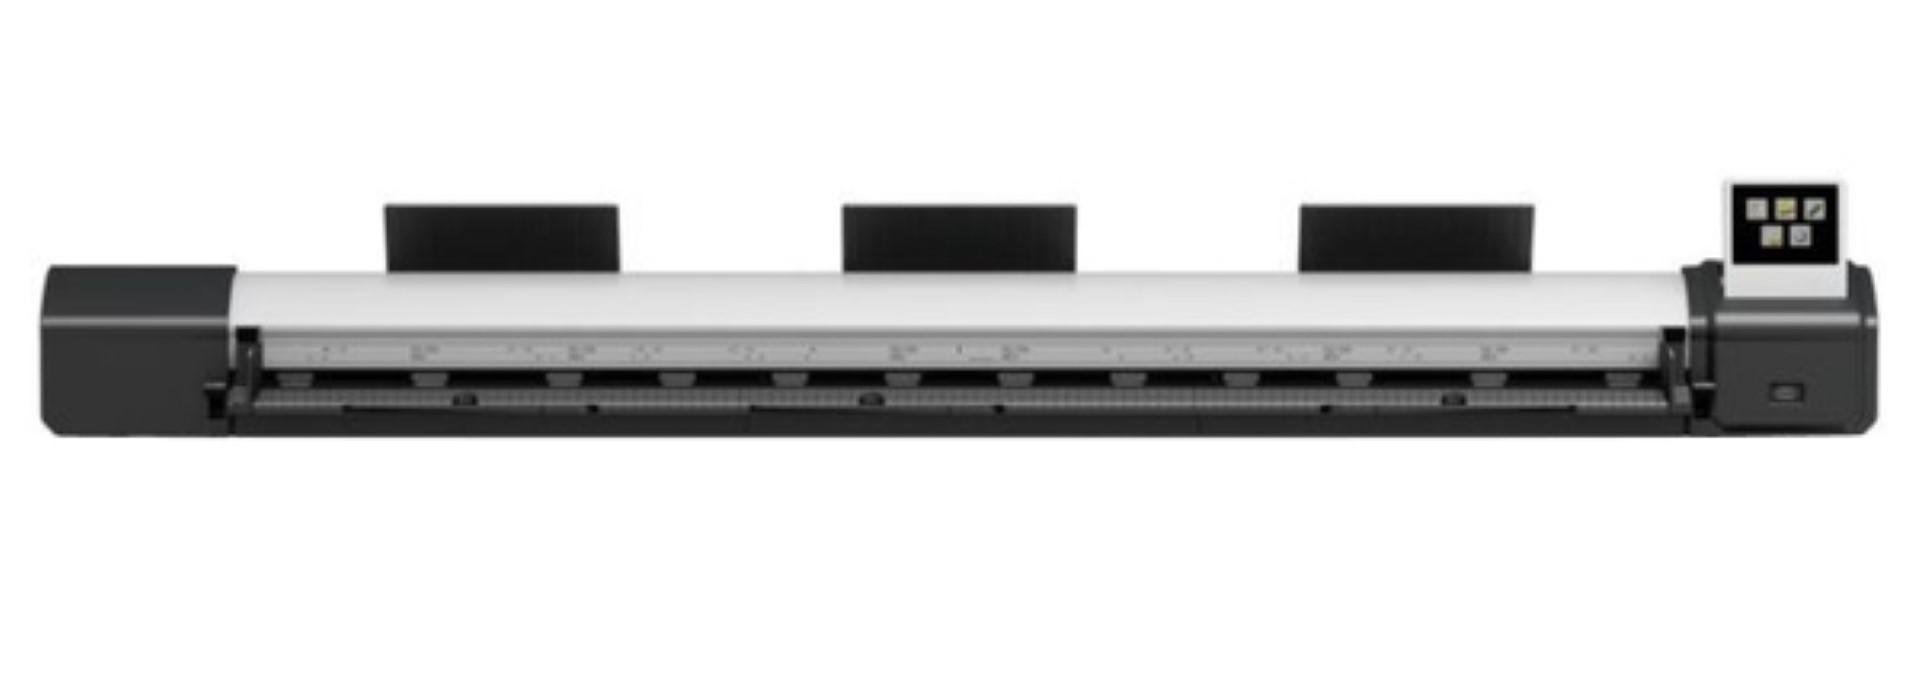 Scanner Canon L36EI pentru TM-300, dimensiune A0, viteza scanare: 3 toli/sec mono, 1.5 toli/sec color, tehnologie single sensor, iluminare LED, rezolutie scanare 600dpi, lungime maxima scanare 2.768m, scan to USB, pc, interfata : USB.